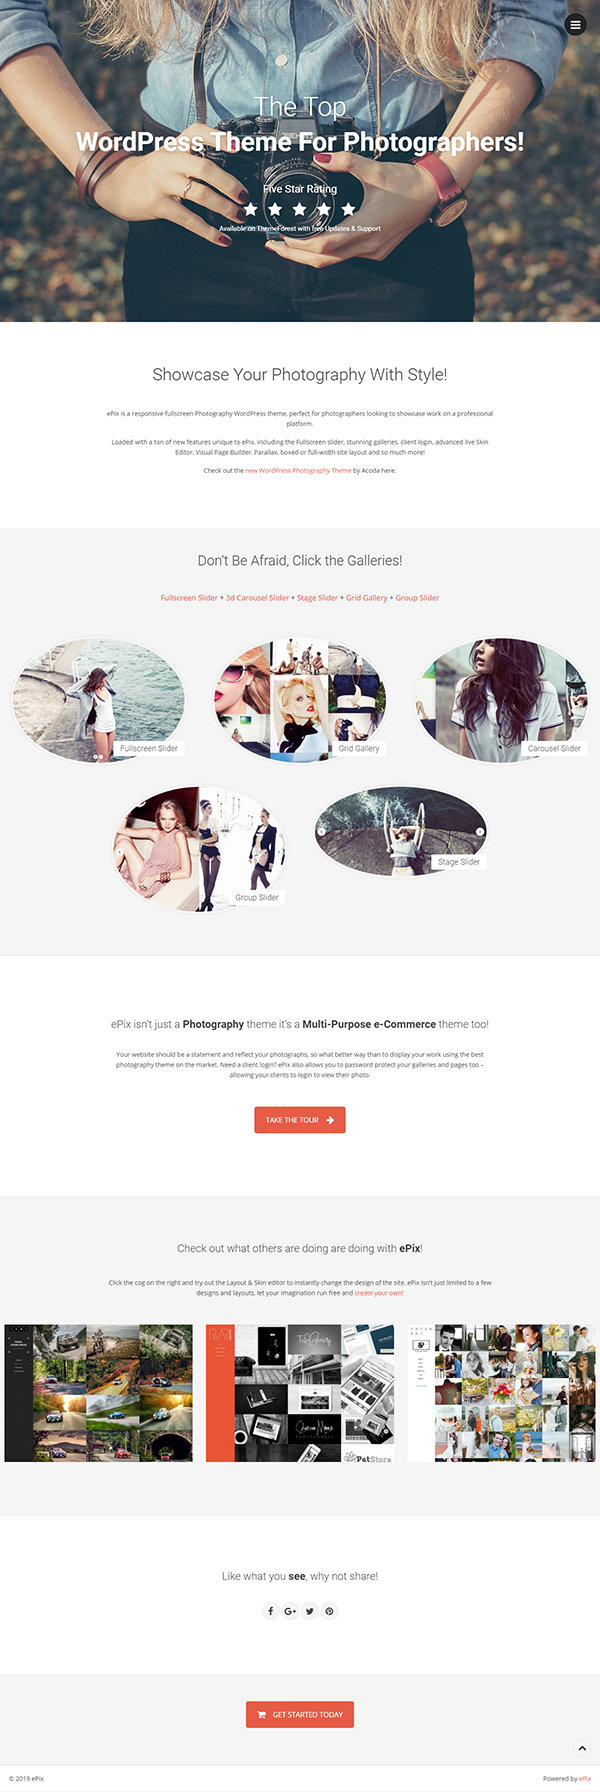 ePix - full screen photography WordPress theme